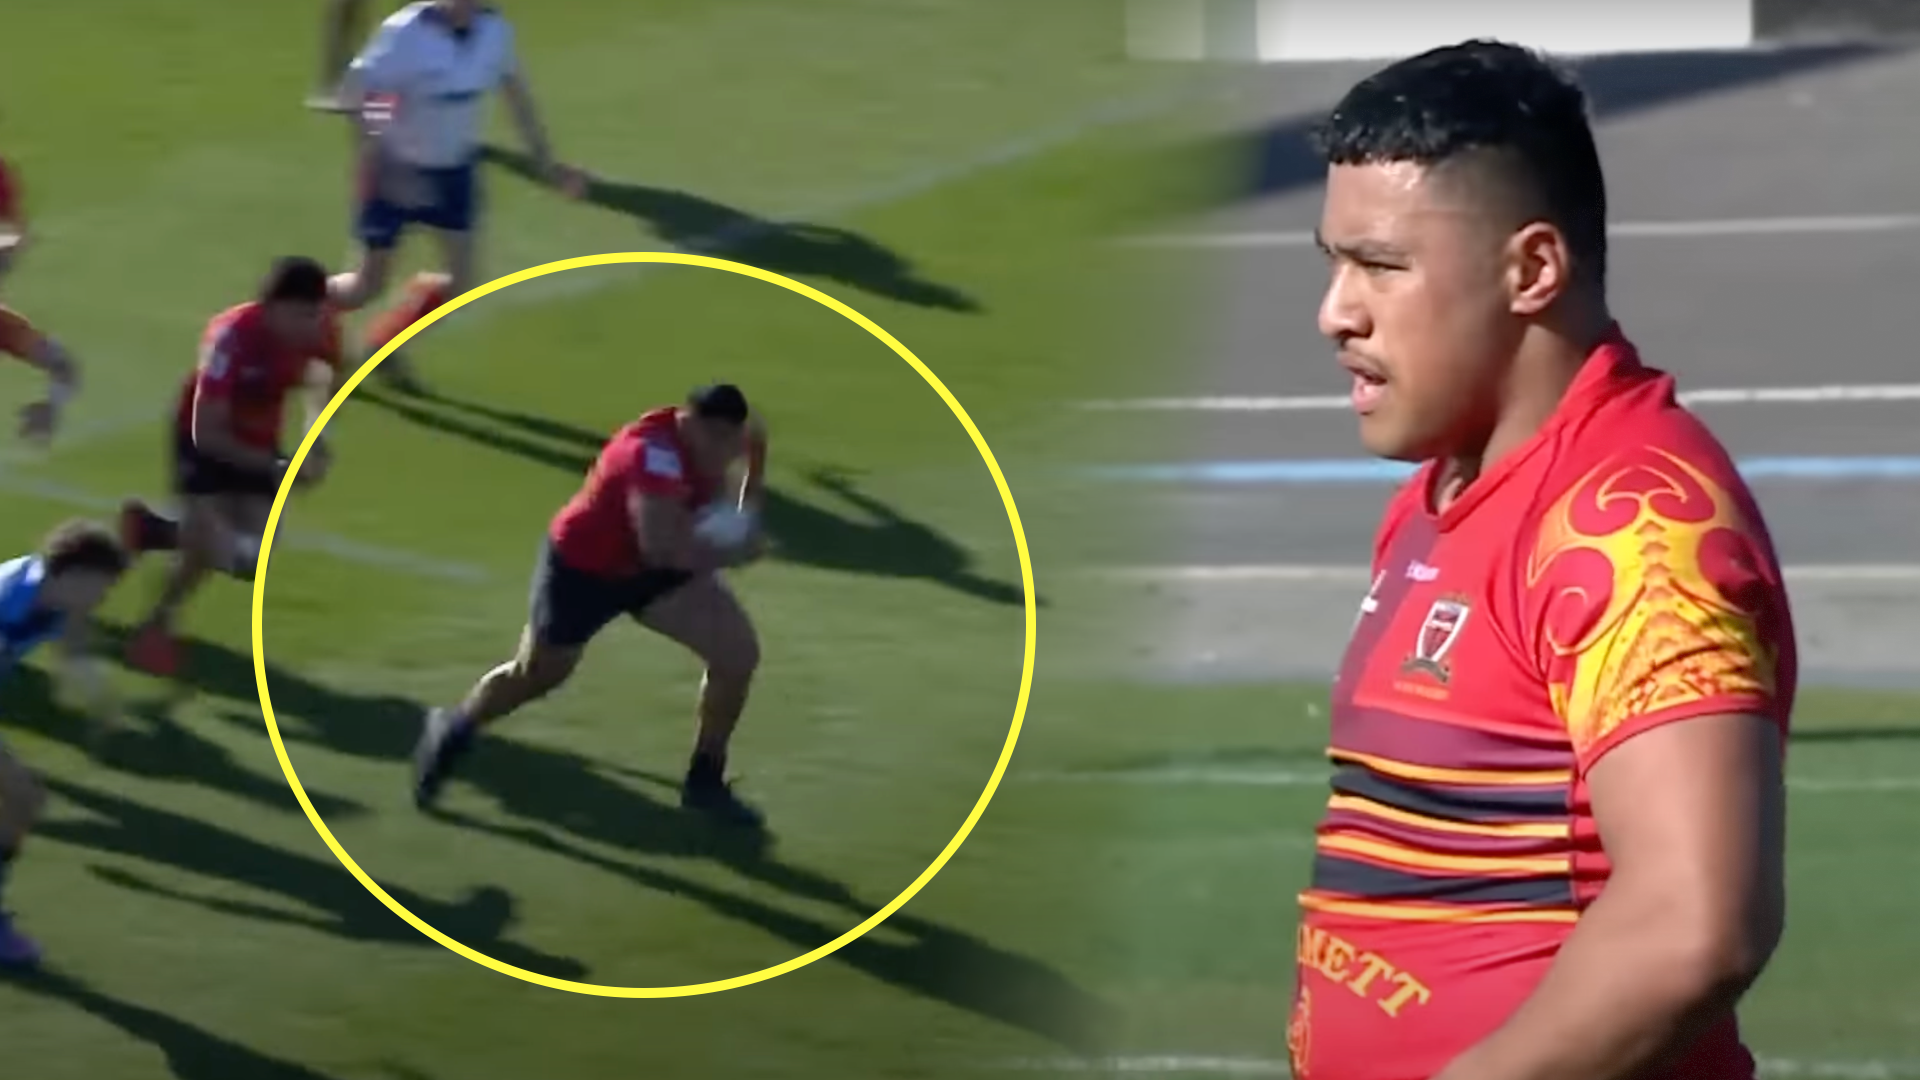 128kg New Zealand schoolboy prop goes viral after unstoppable game